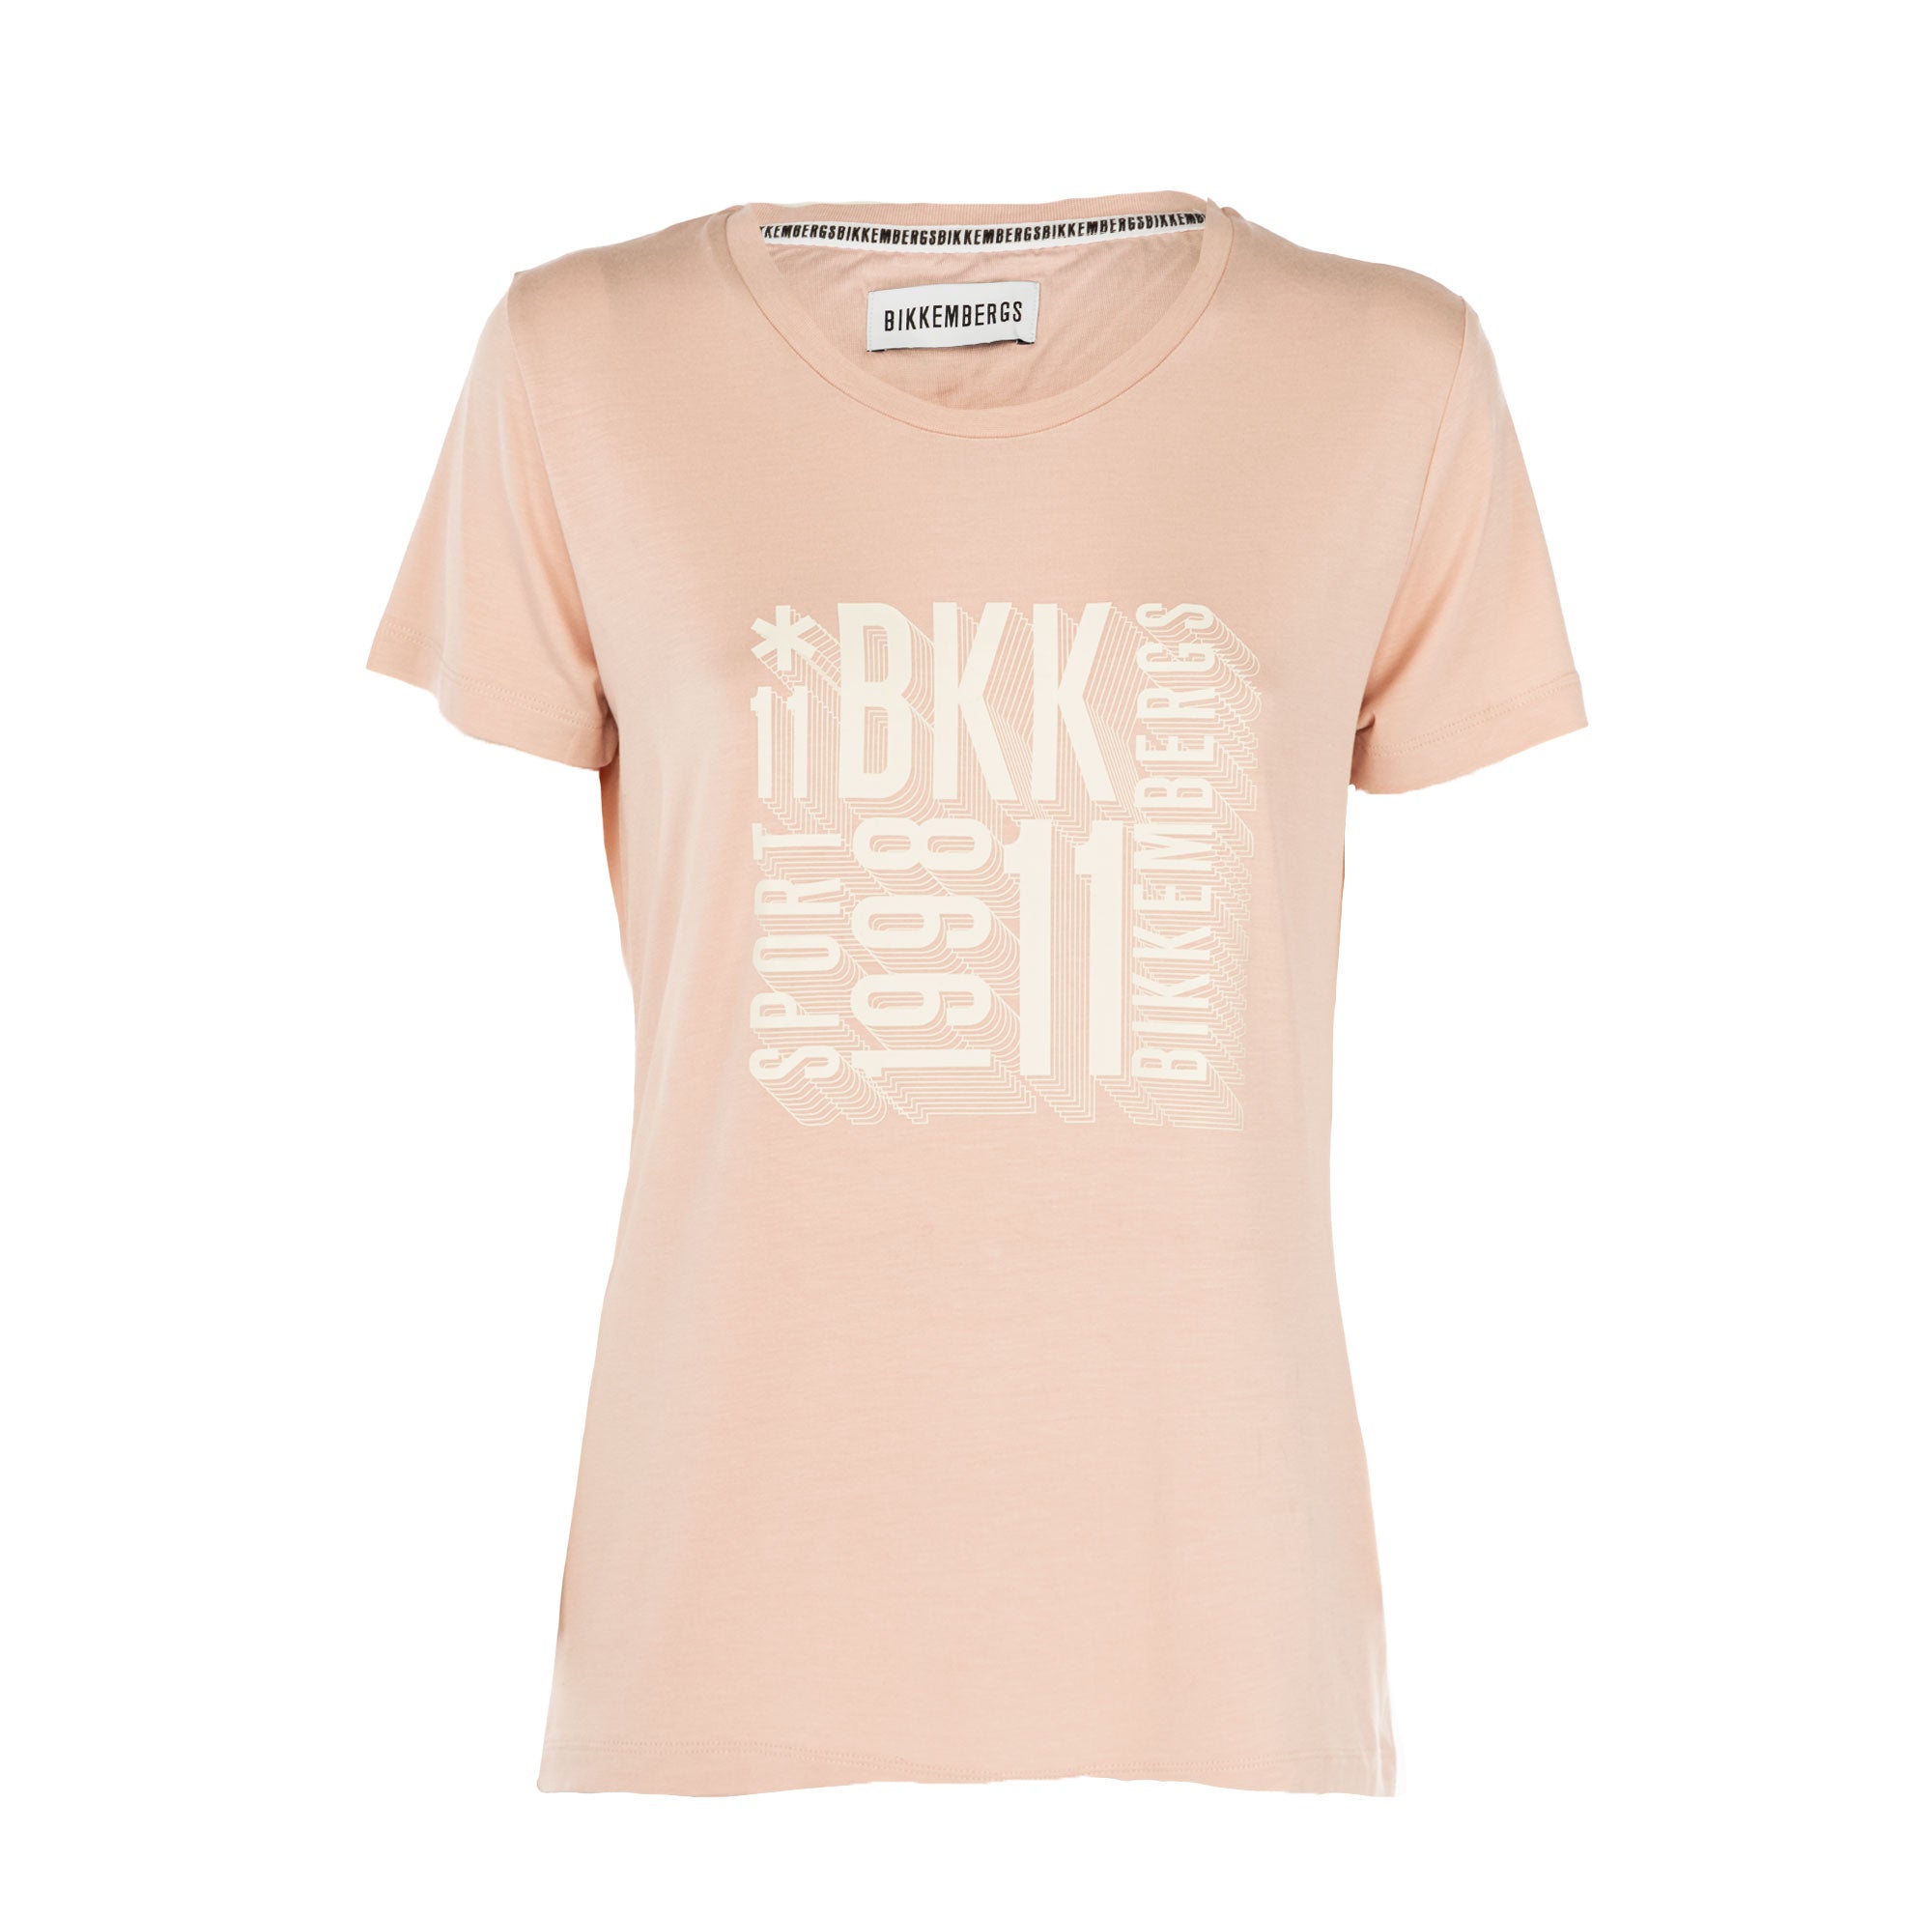 bikkembergs | t-shirt da donna